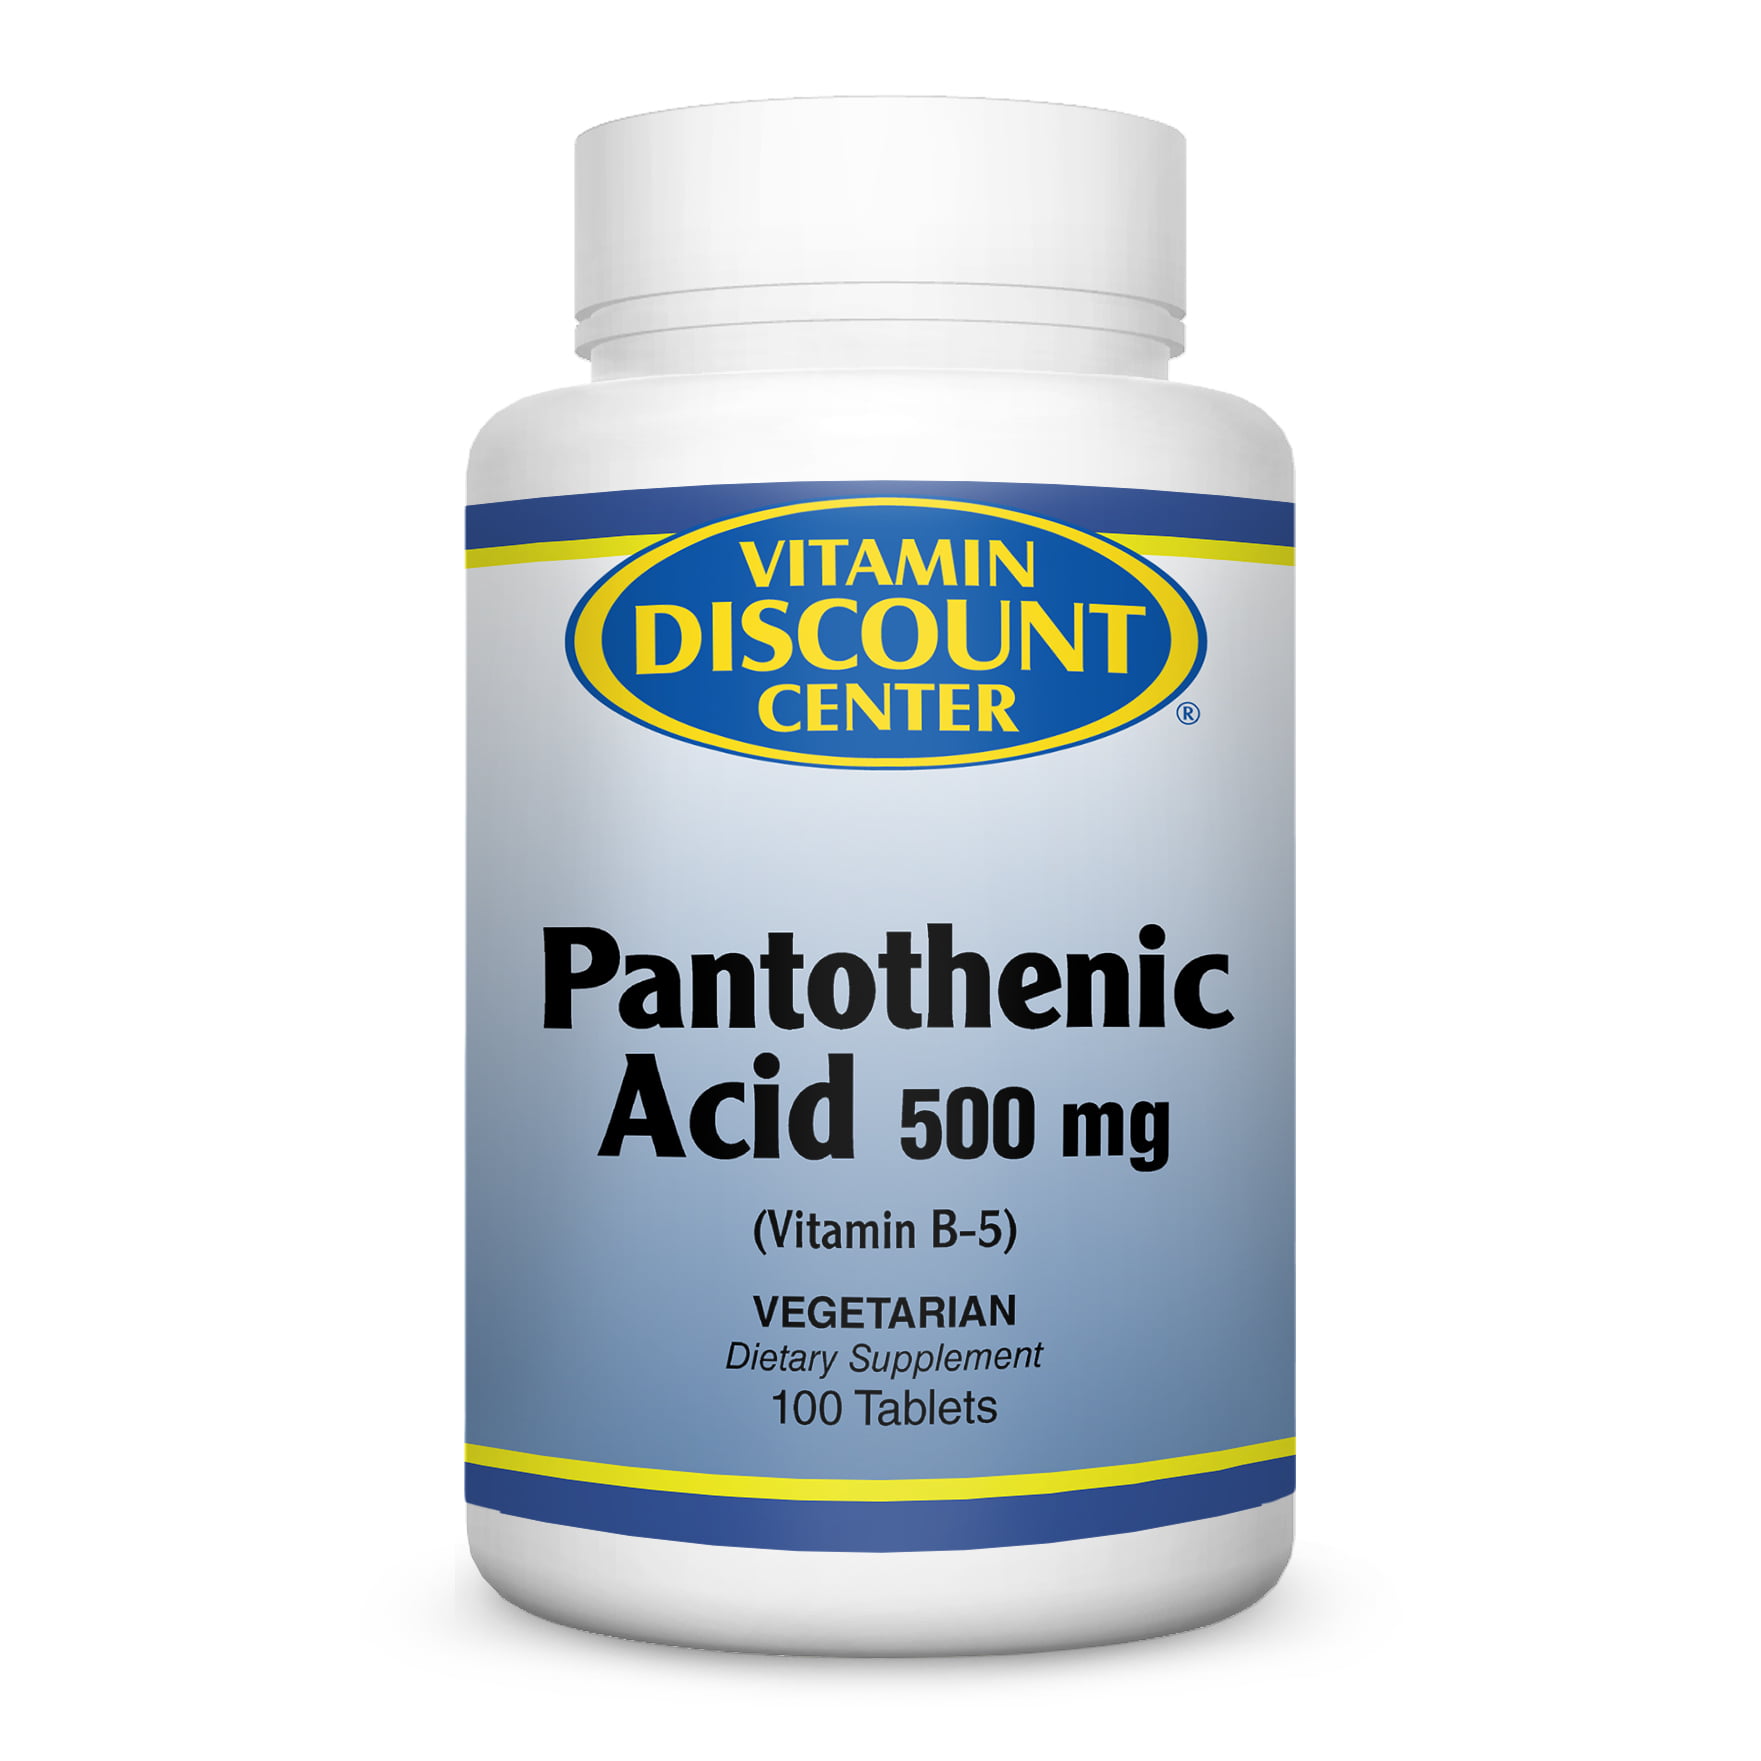 Pantothenic acid tablets